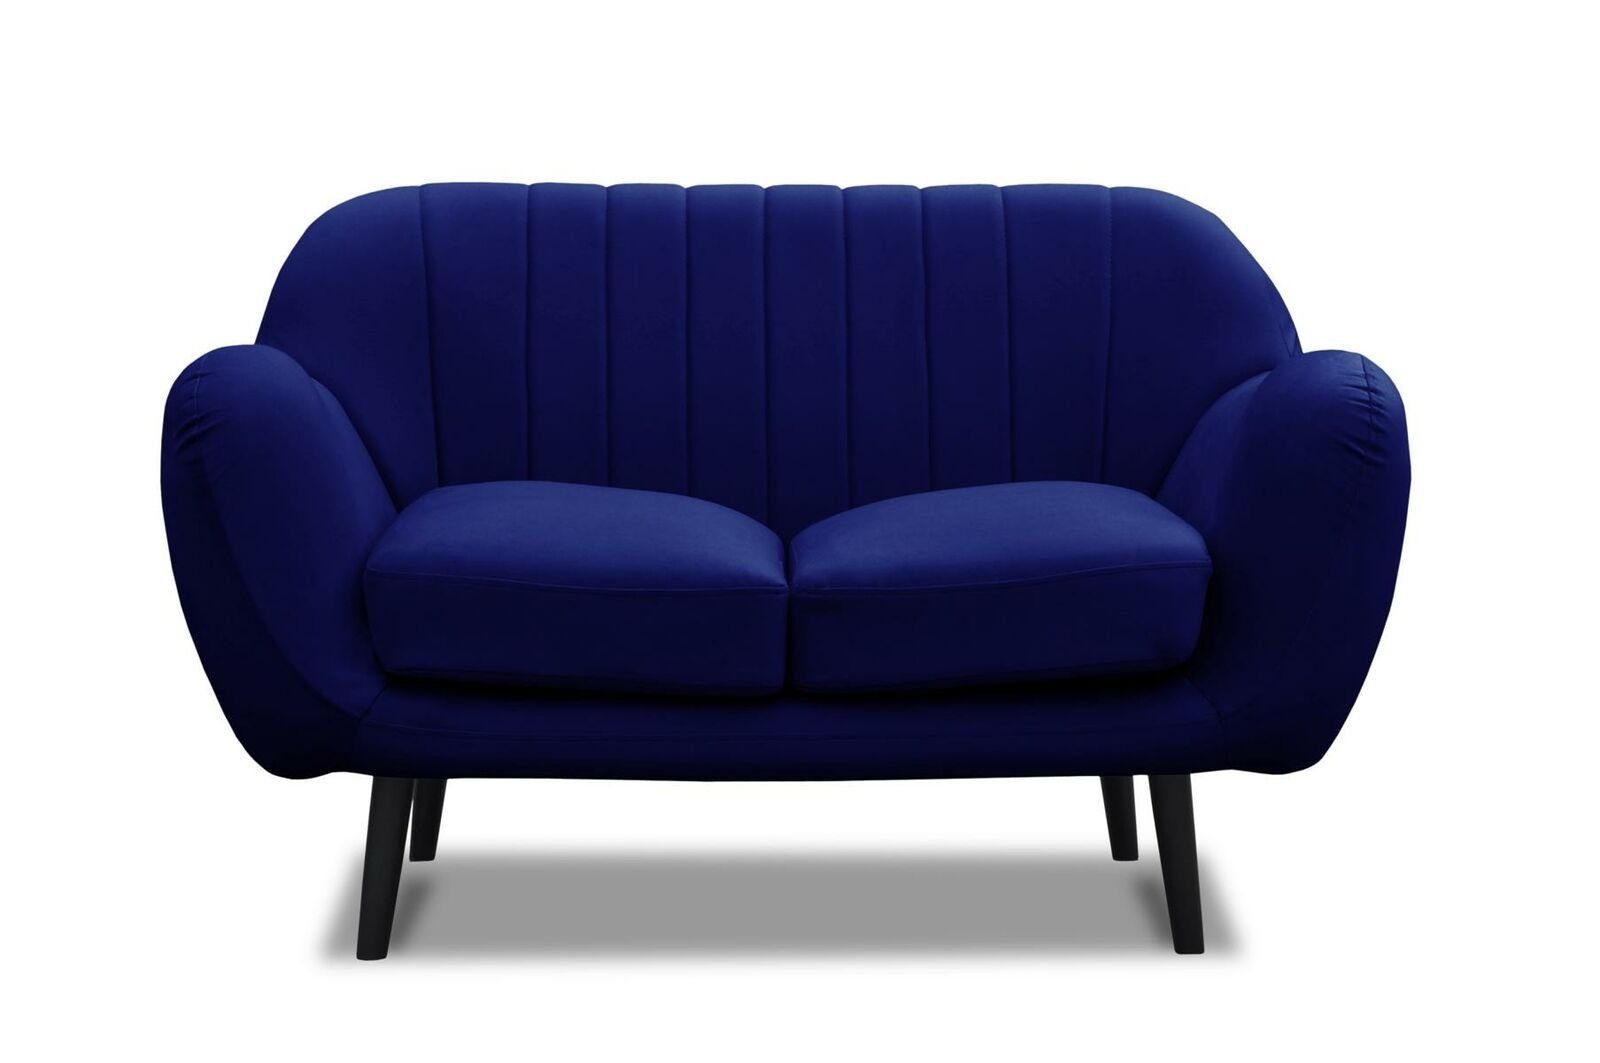 JVmoebel Sofa Blaue Polster Couchgarnitur 3+2+1 Sitzer Polster Möbel Sofagarnitur, Made in Europe